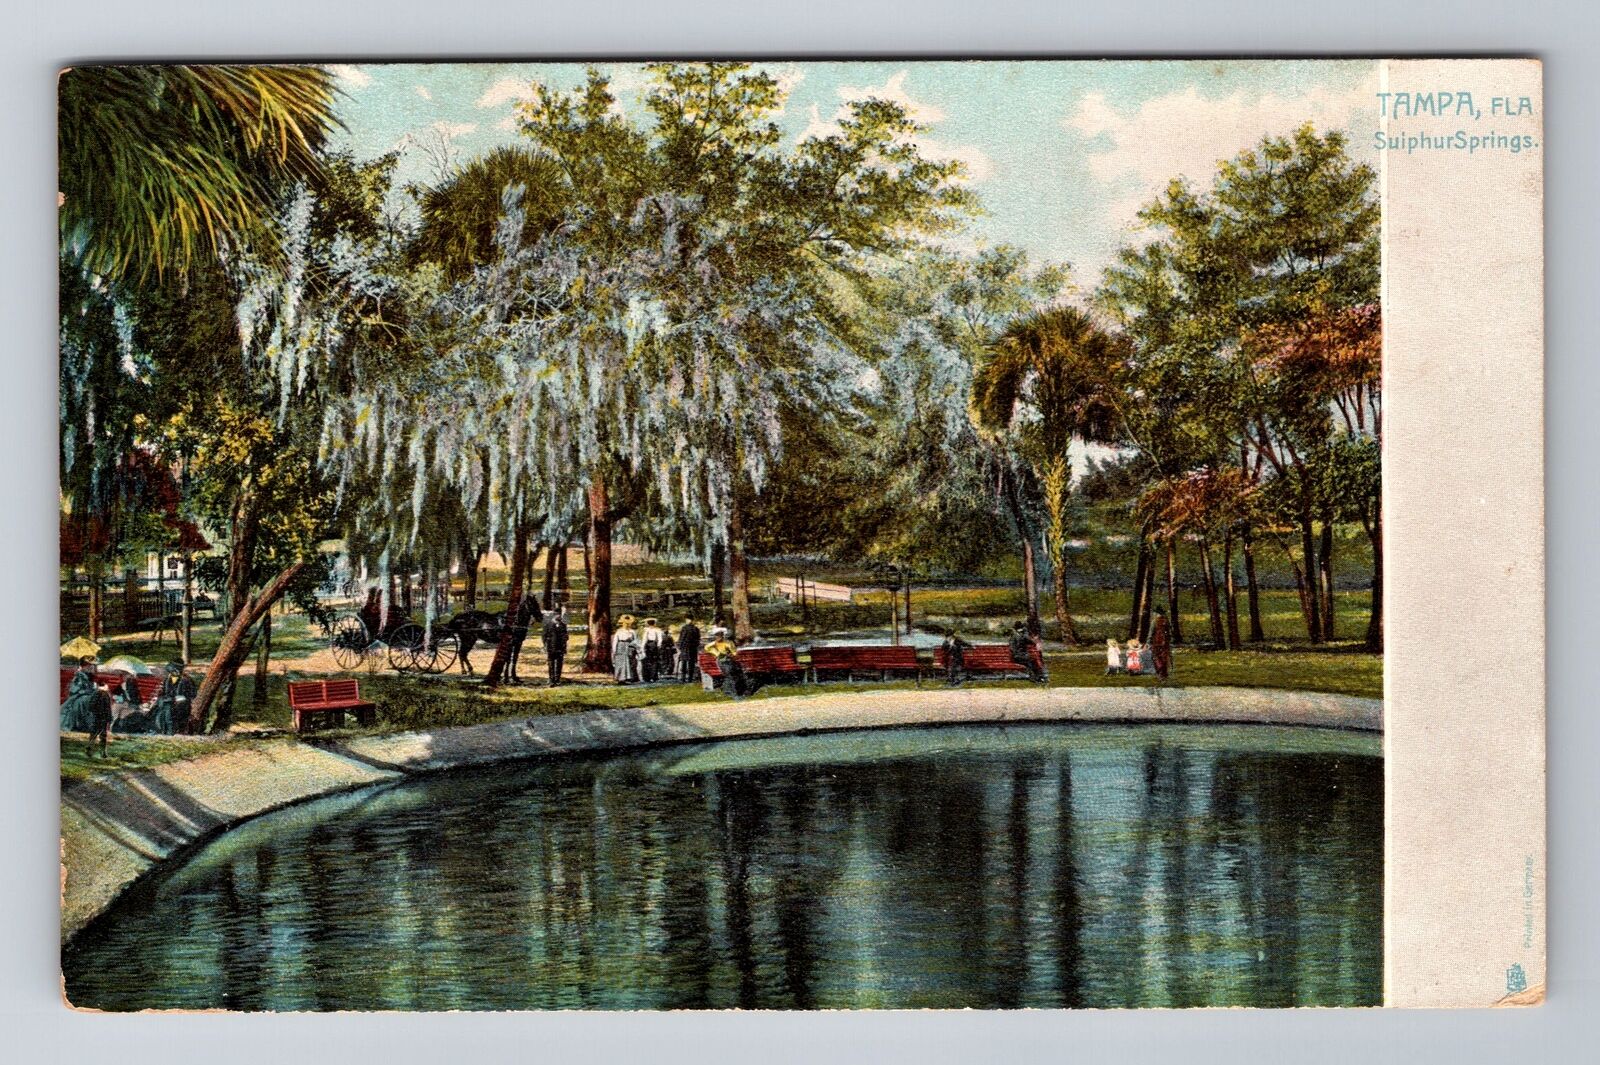 Tampa FL-Florida, Sulphur Springs, Antique, Vintage Souvenir Postcard